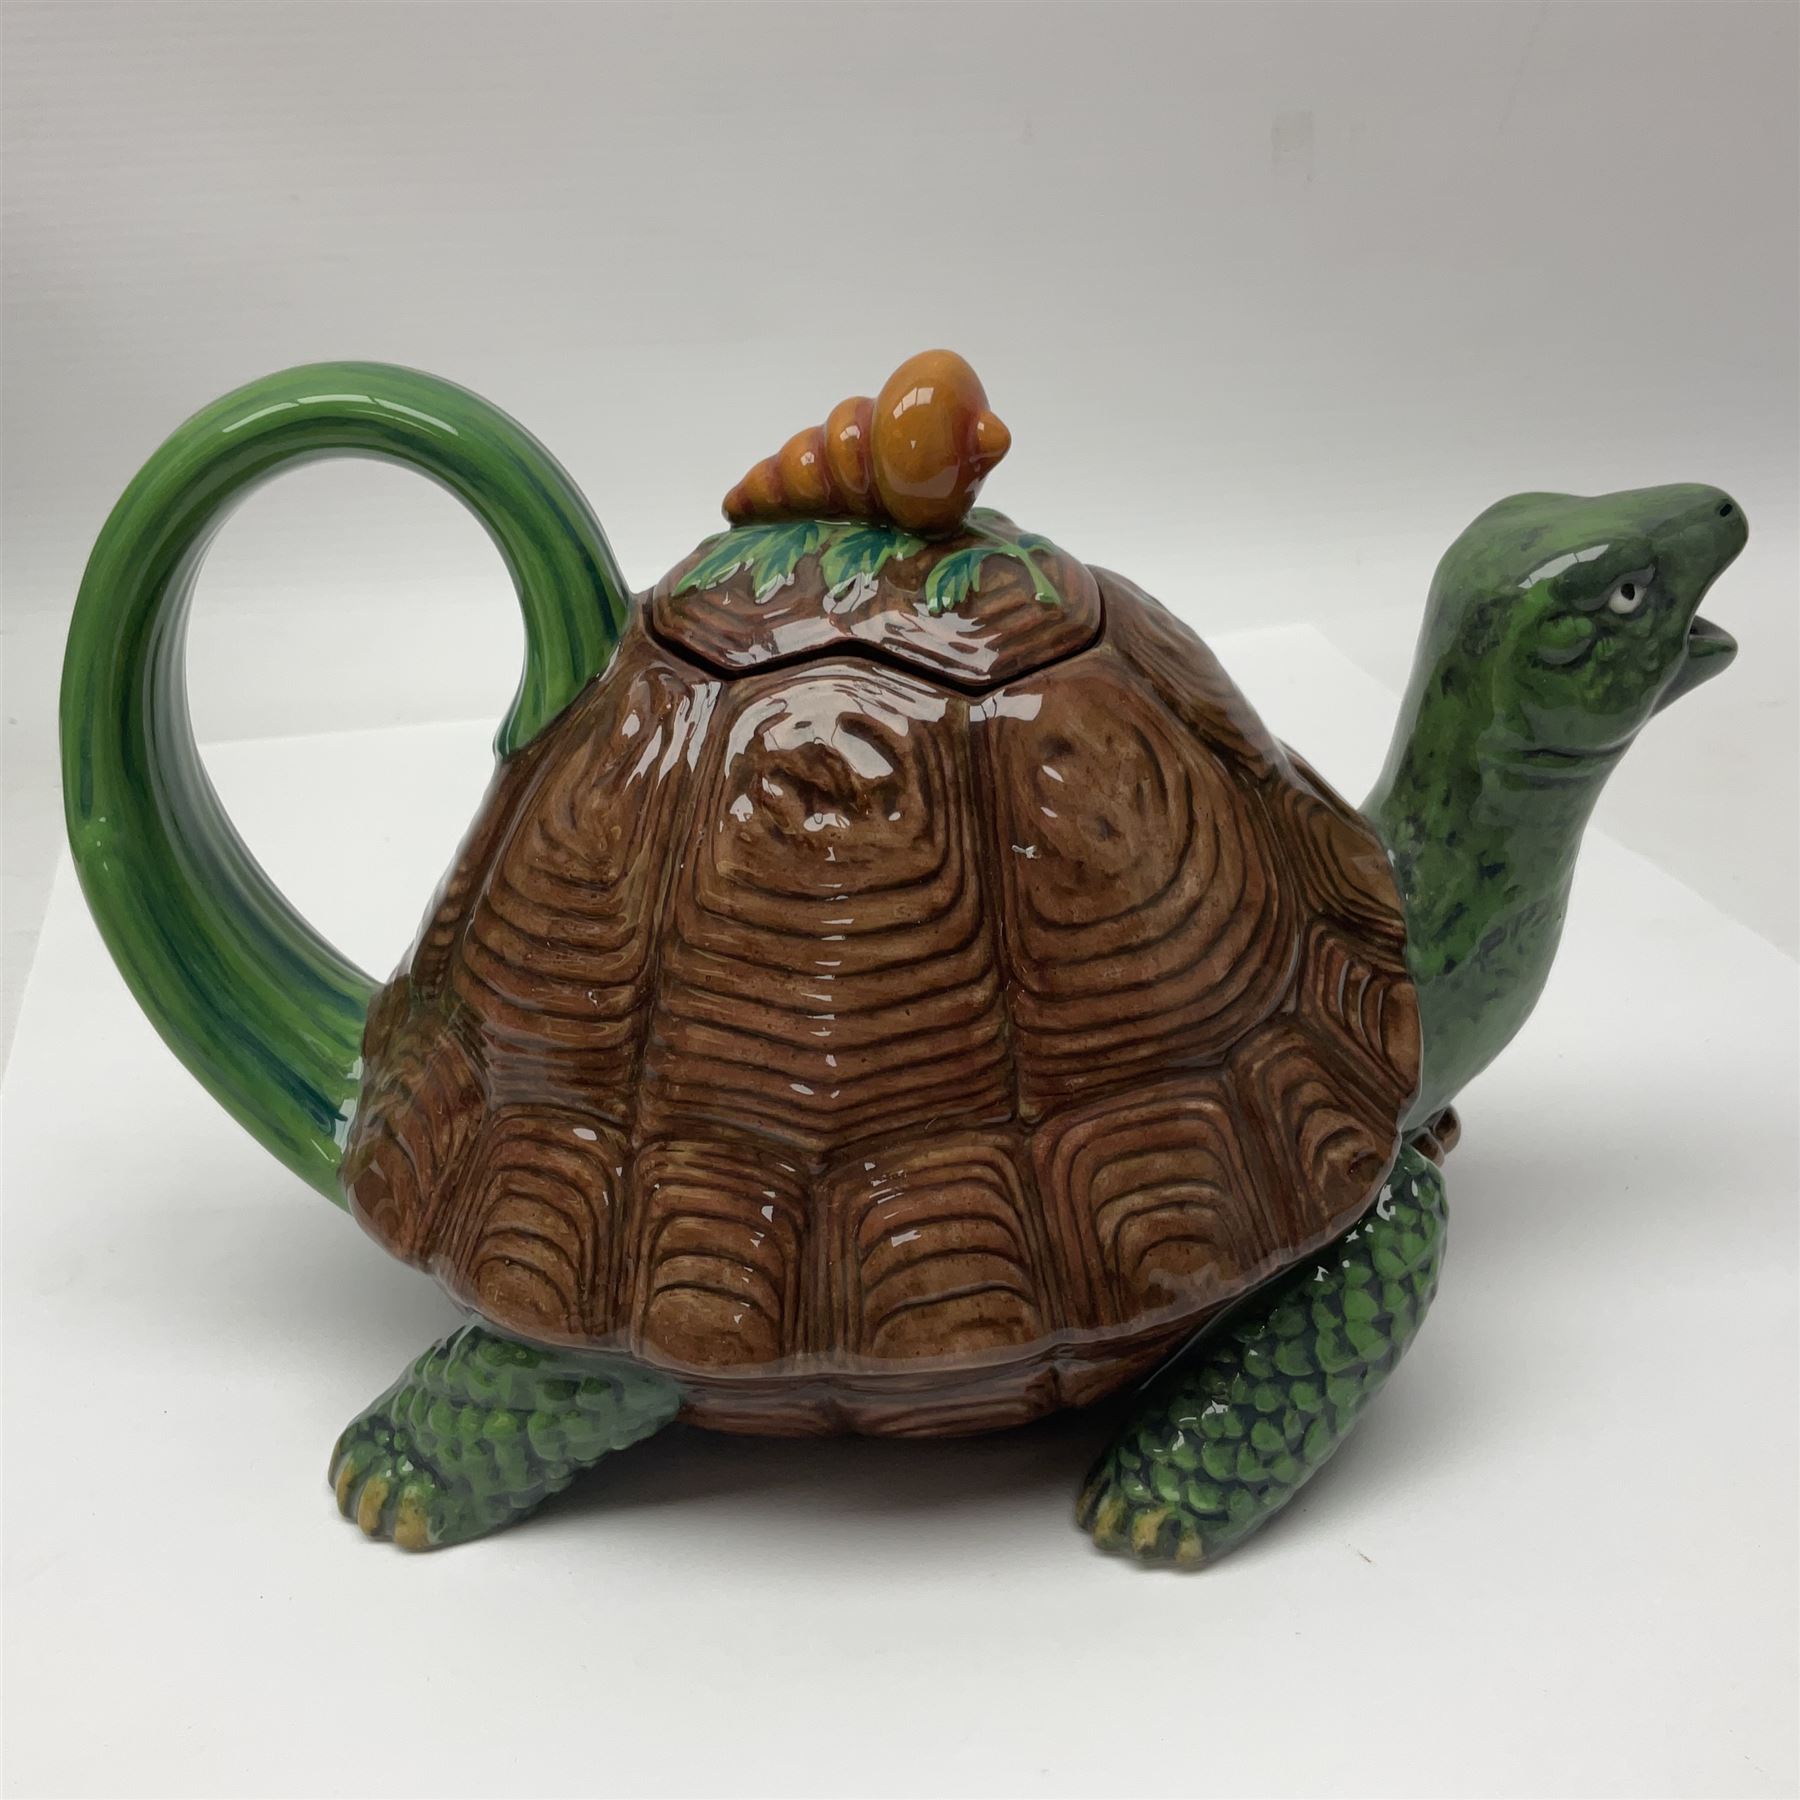 Minton Archive collection tortoise teapot - Image 9 of 14